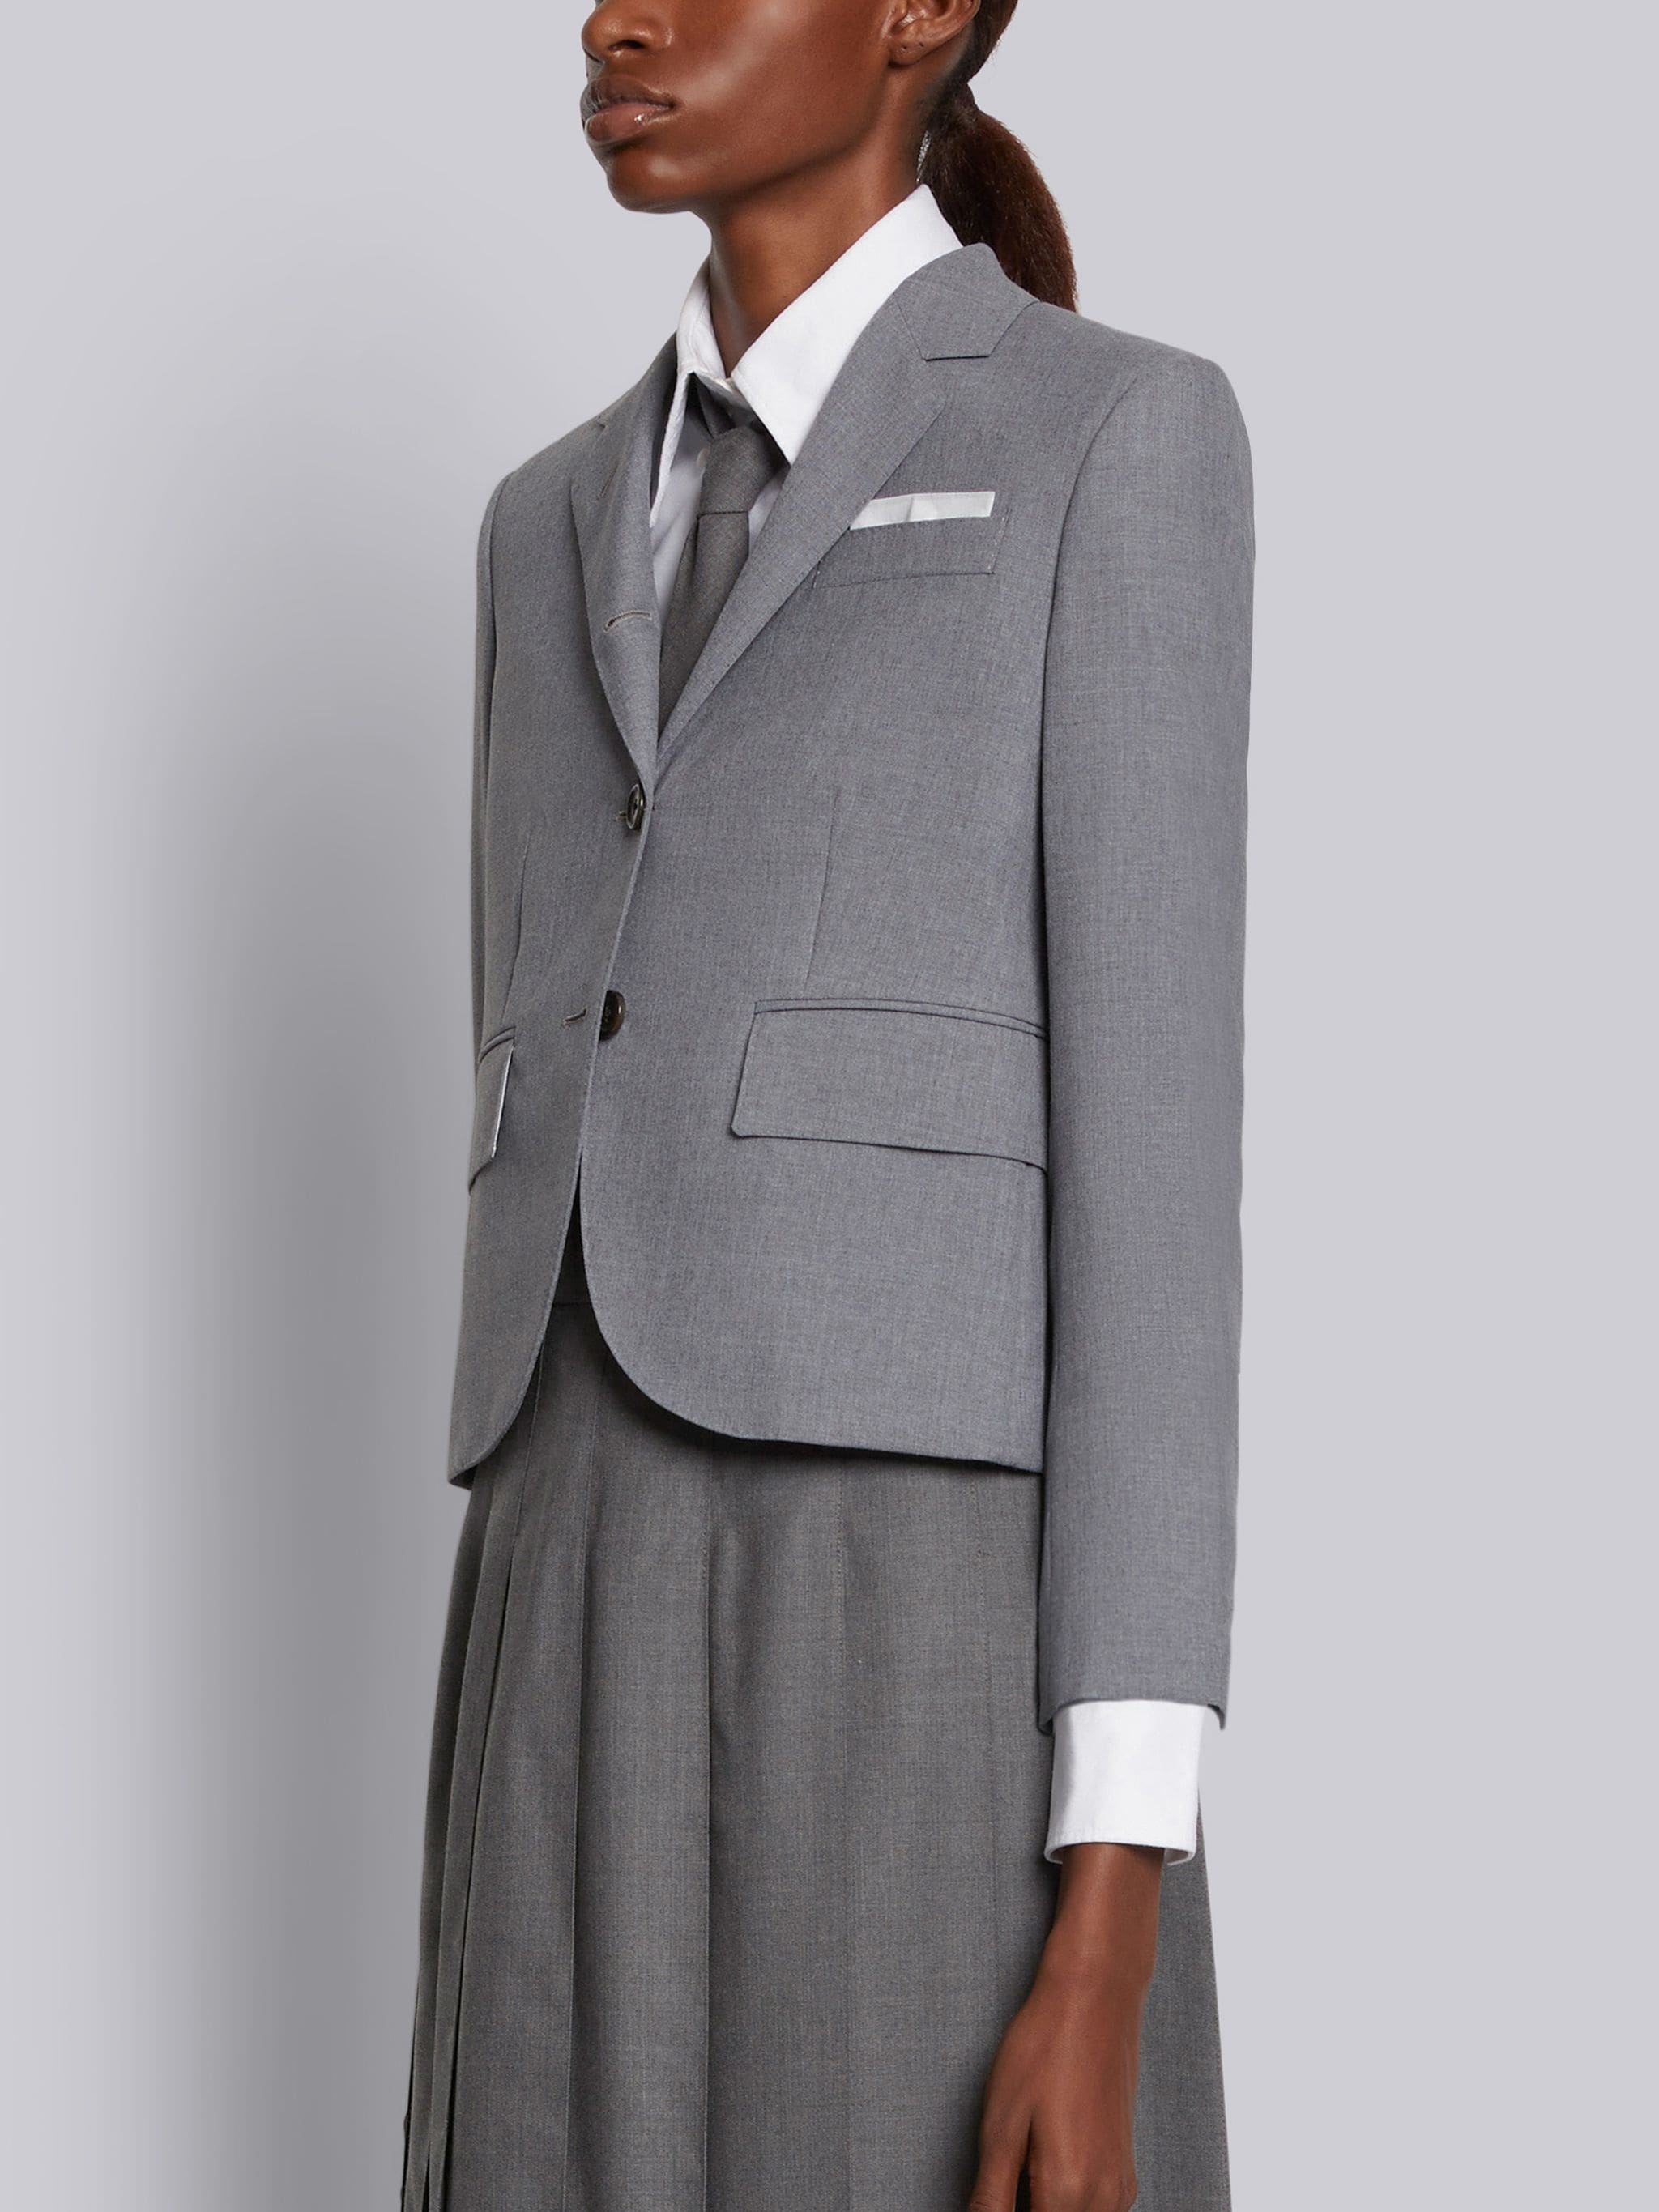 Medium Grey School Uniform Plain Weave High Armhole Single Breasted Sport Coat - 2